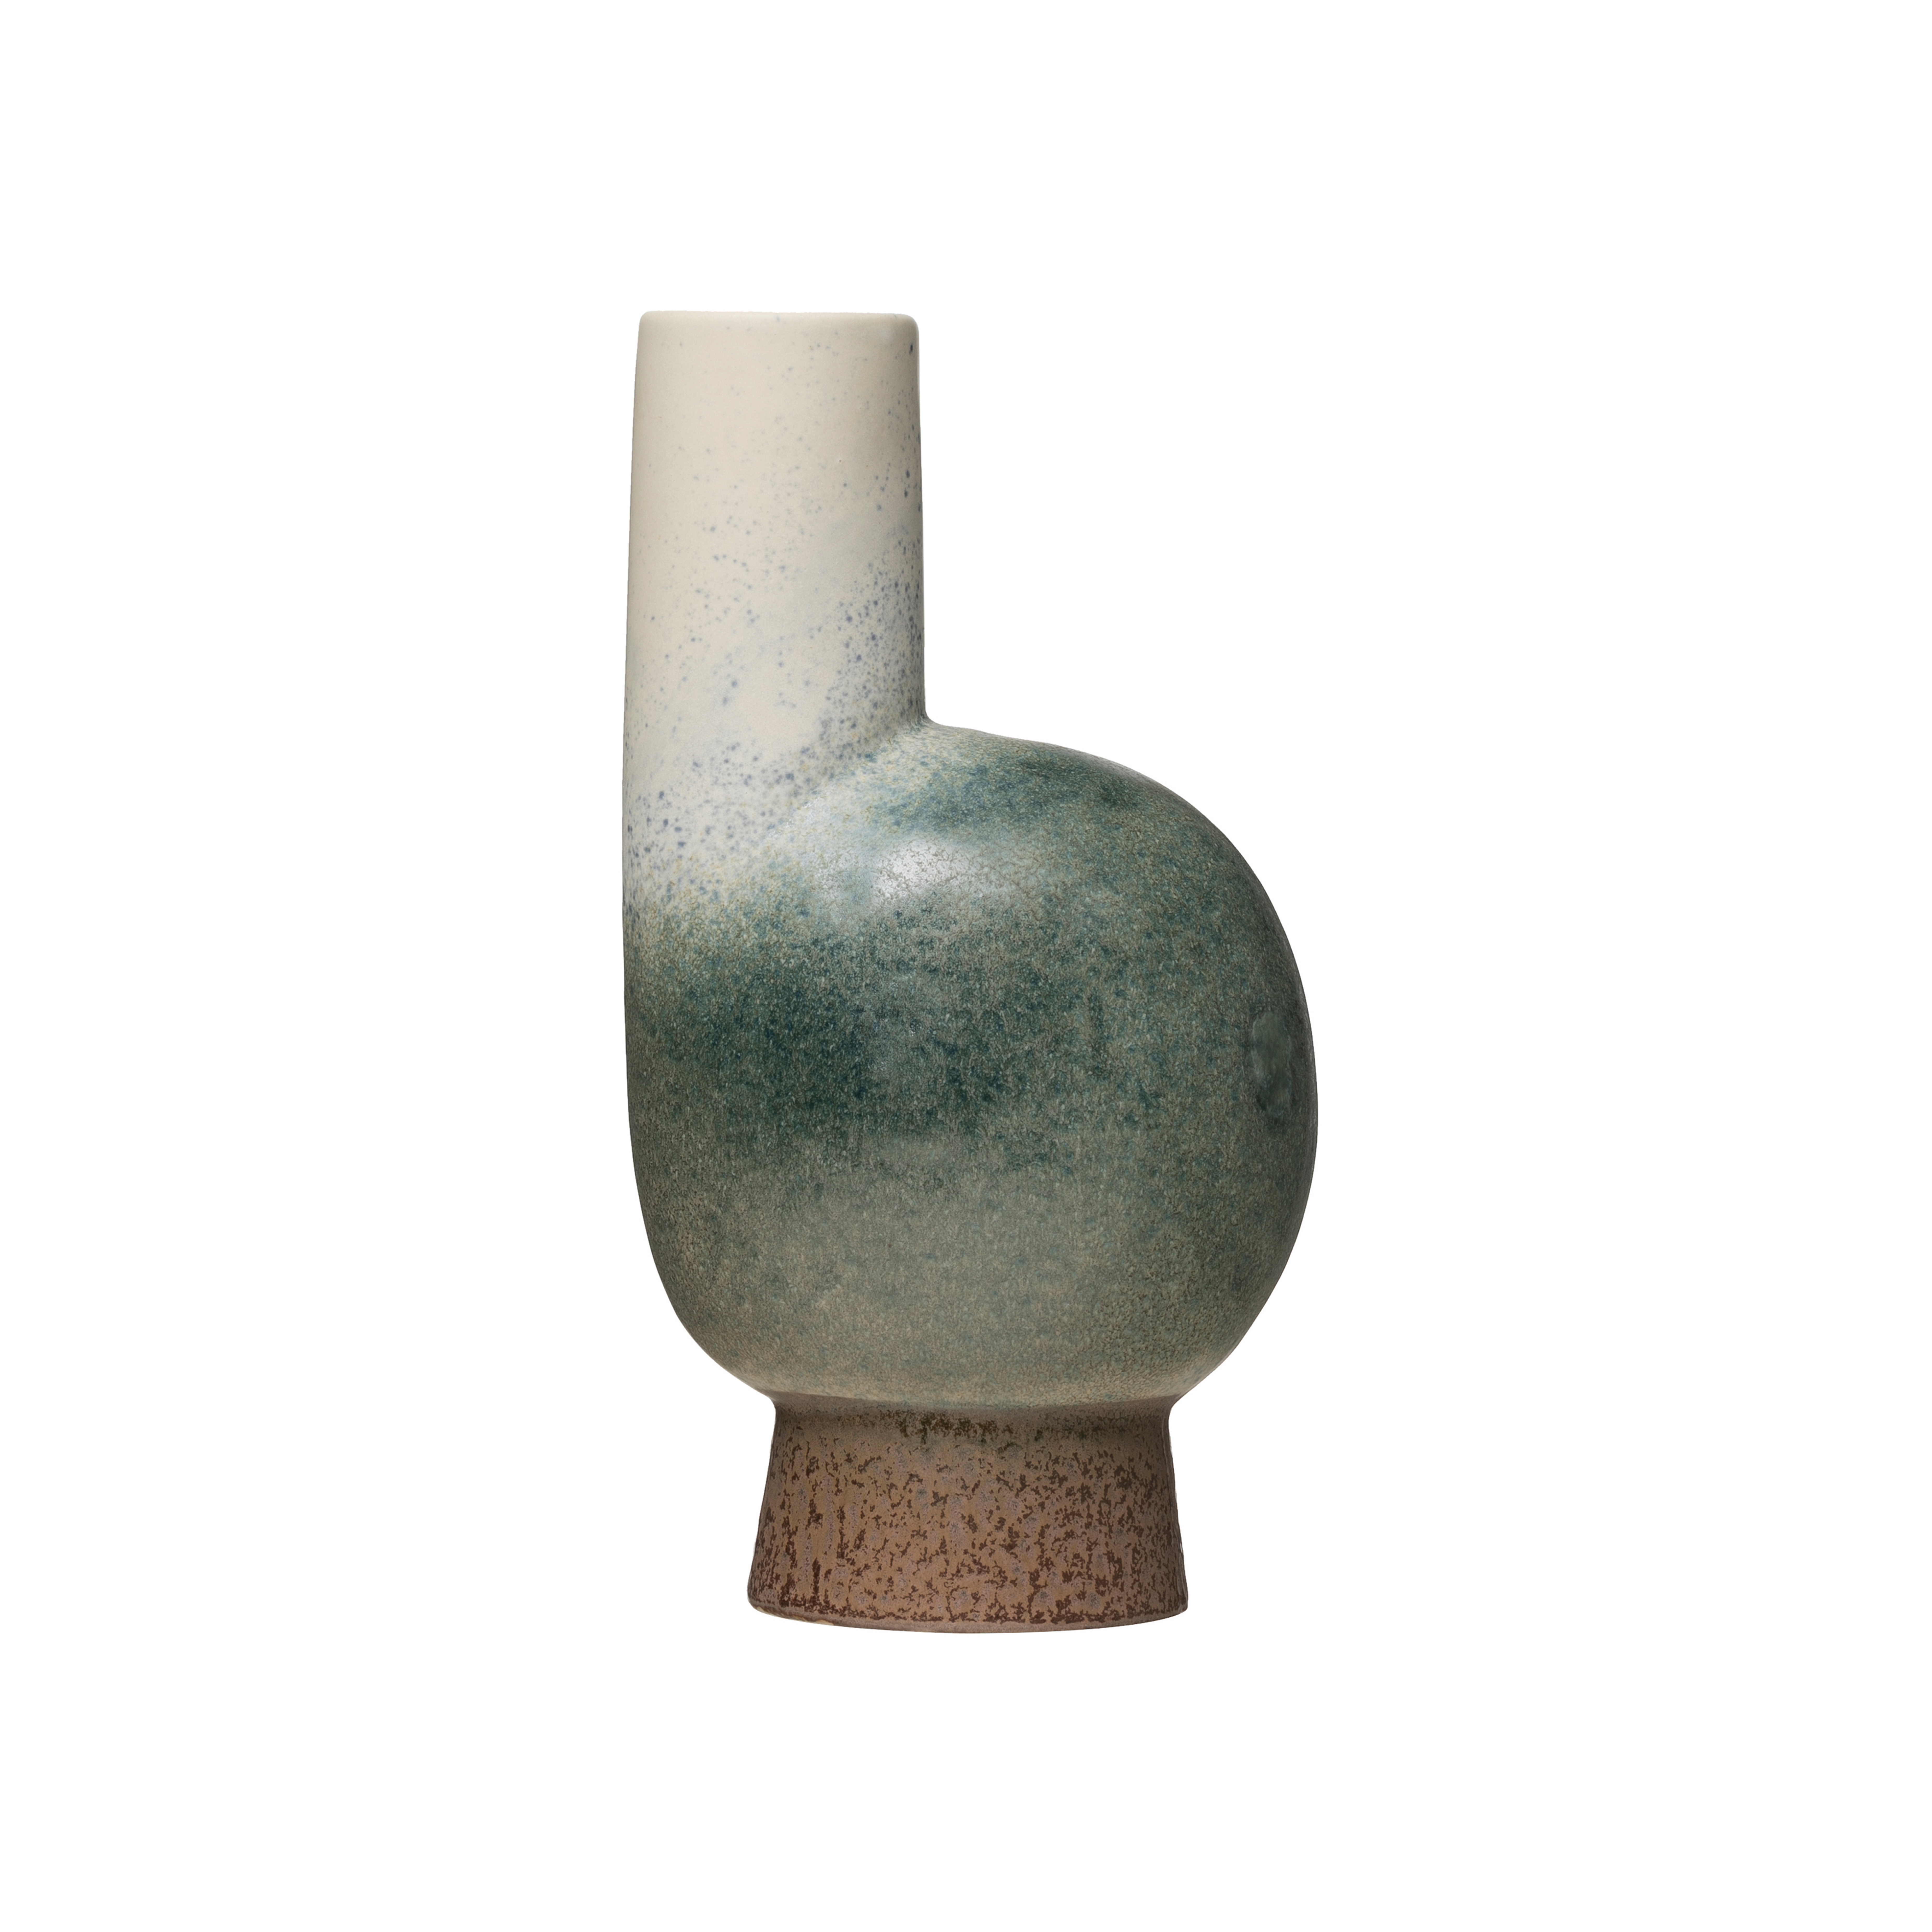 11"H Round Stoneware Vase with Chimney, Pedestal Base & Reactive Glaze Finish (Each one will vary) - Moss & Wilder